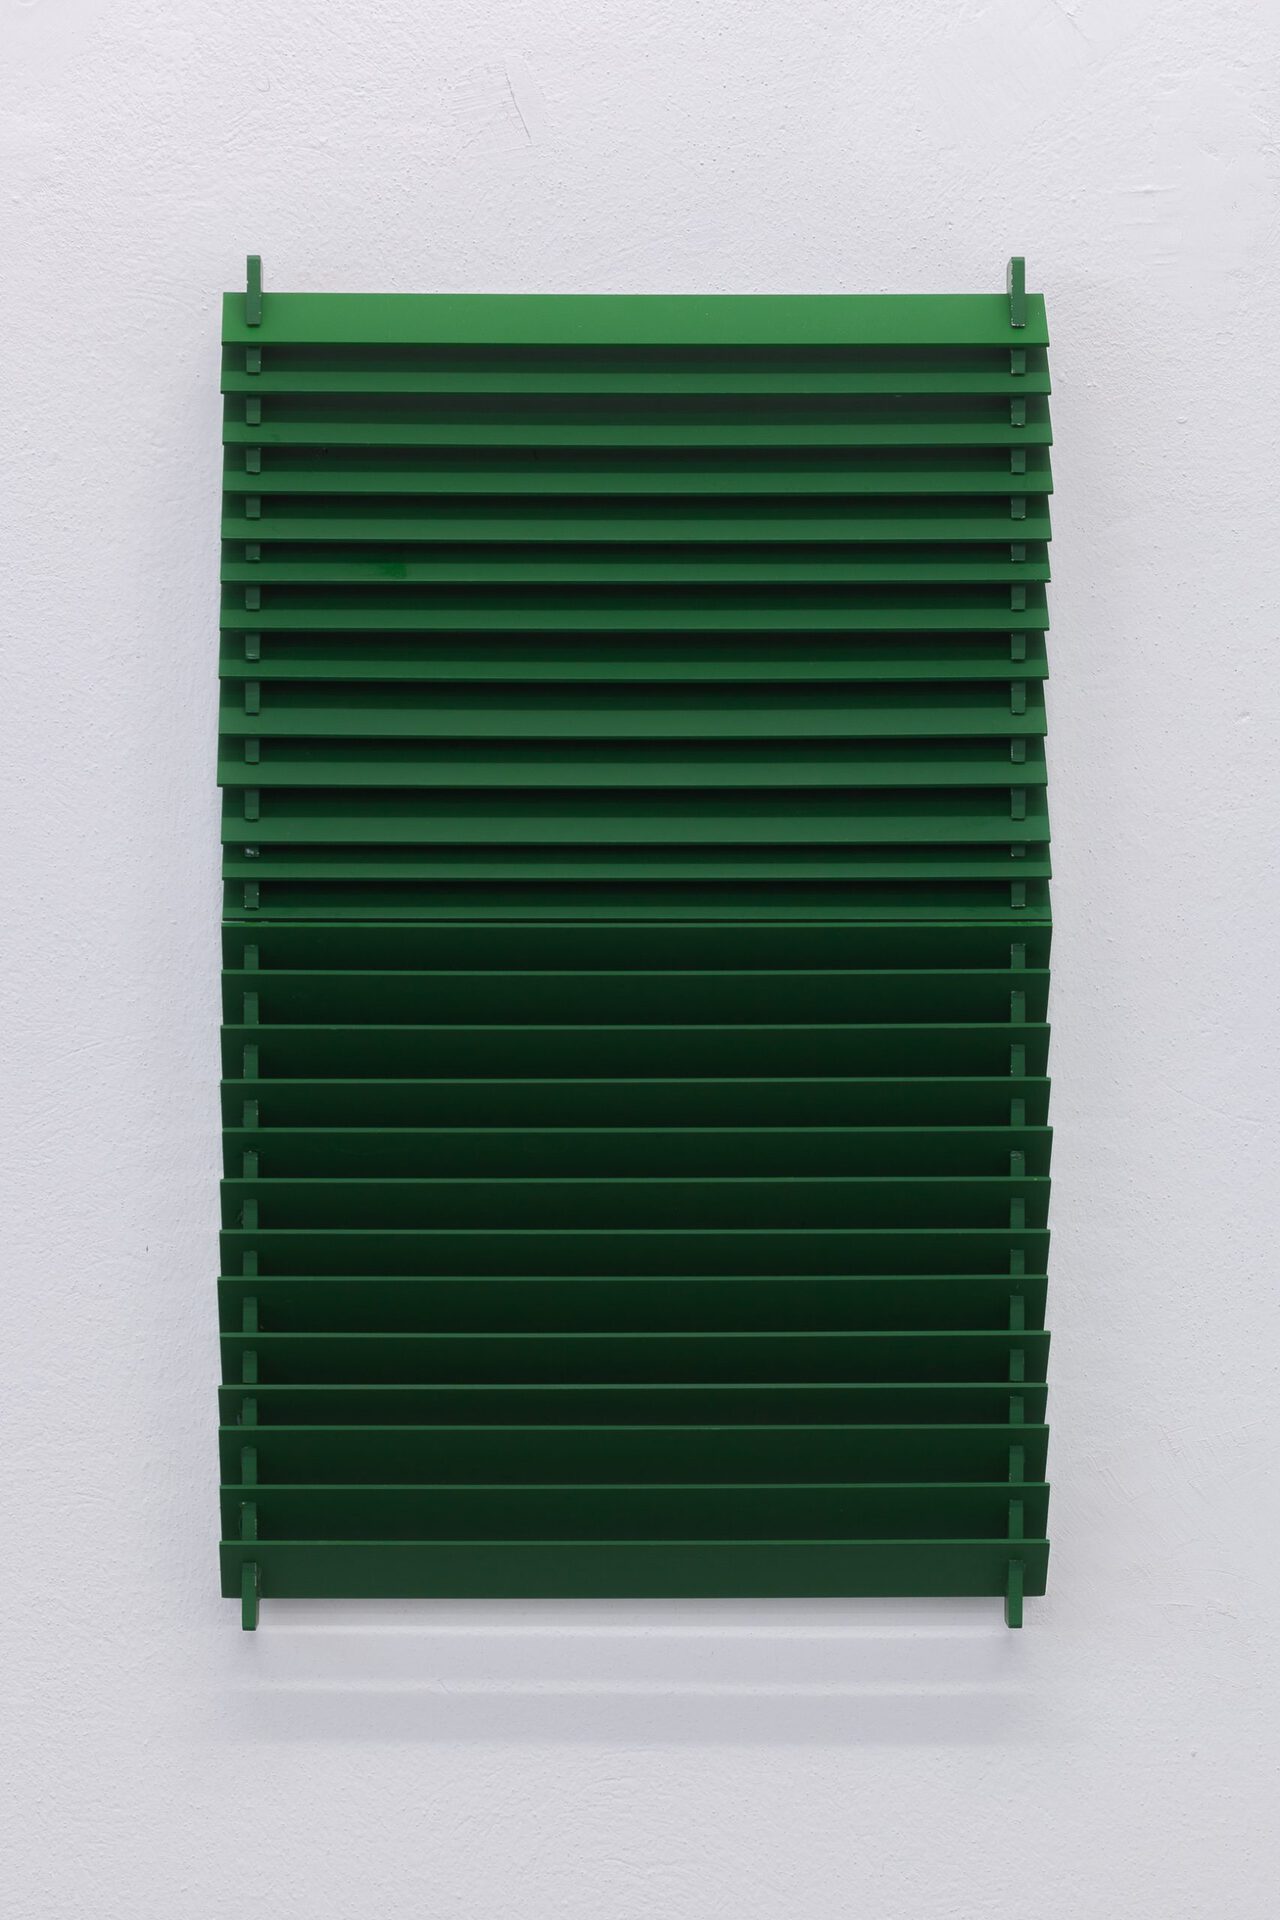 Elizabeth Orr, In and Of, 2021, Aluminum, wood, plexiglass, 61 x 38.1 x 3.8 cm, 24 x 15 x 1.5 in